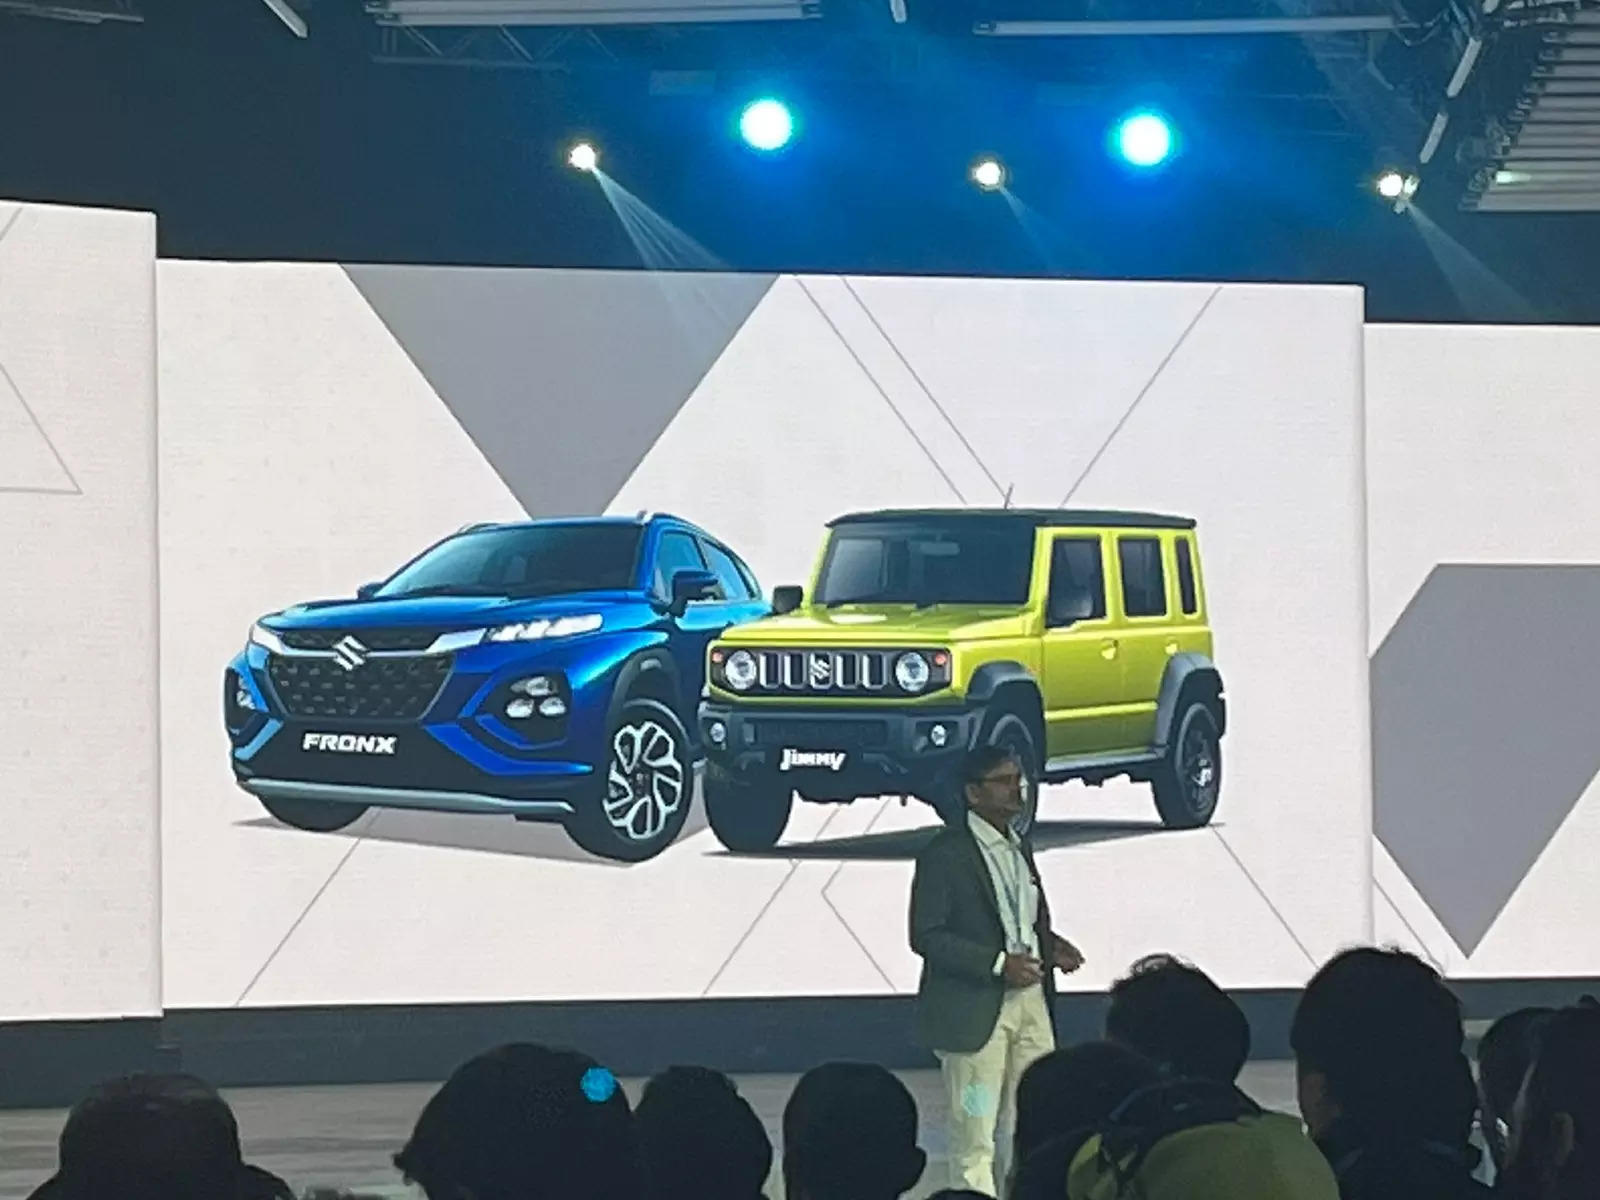   FRONX and JIMNY will further strengthen Maruti Suzuki's robust SUV line-up.